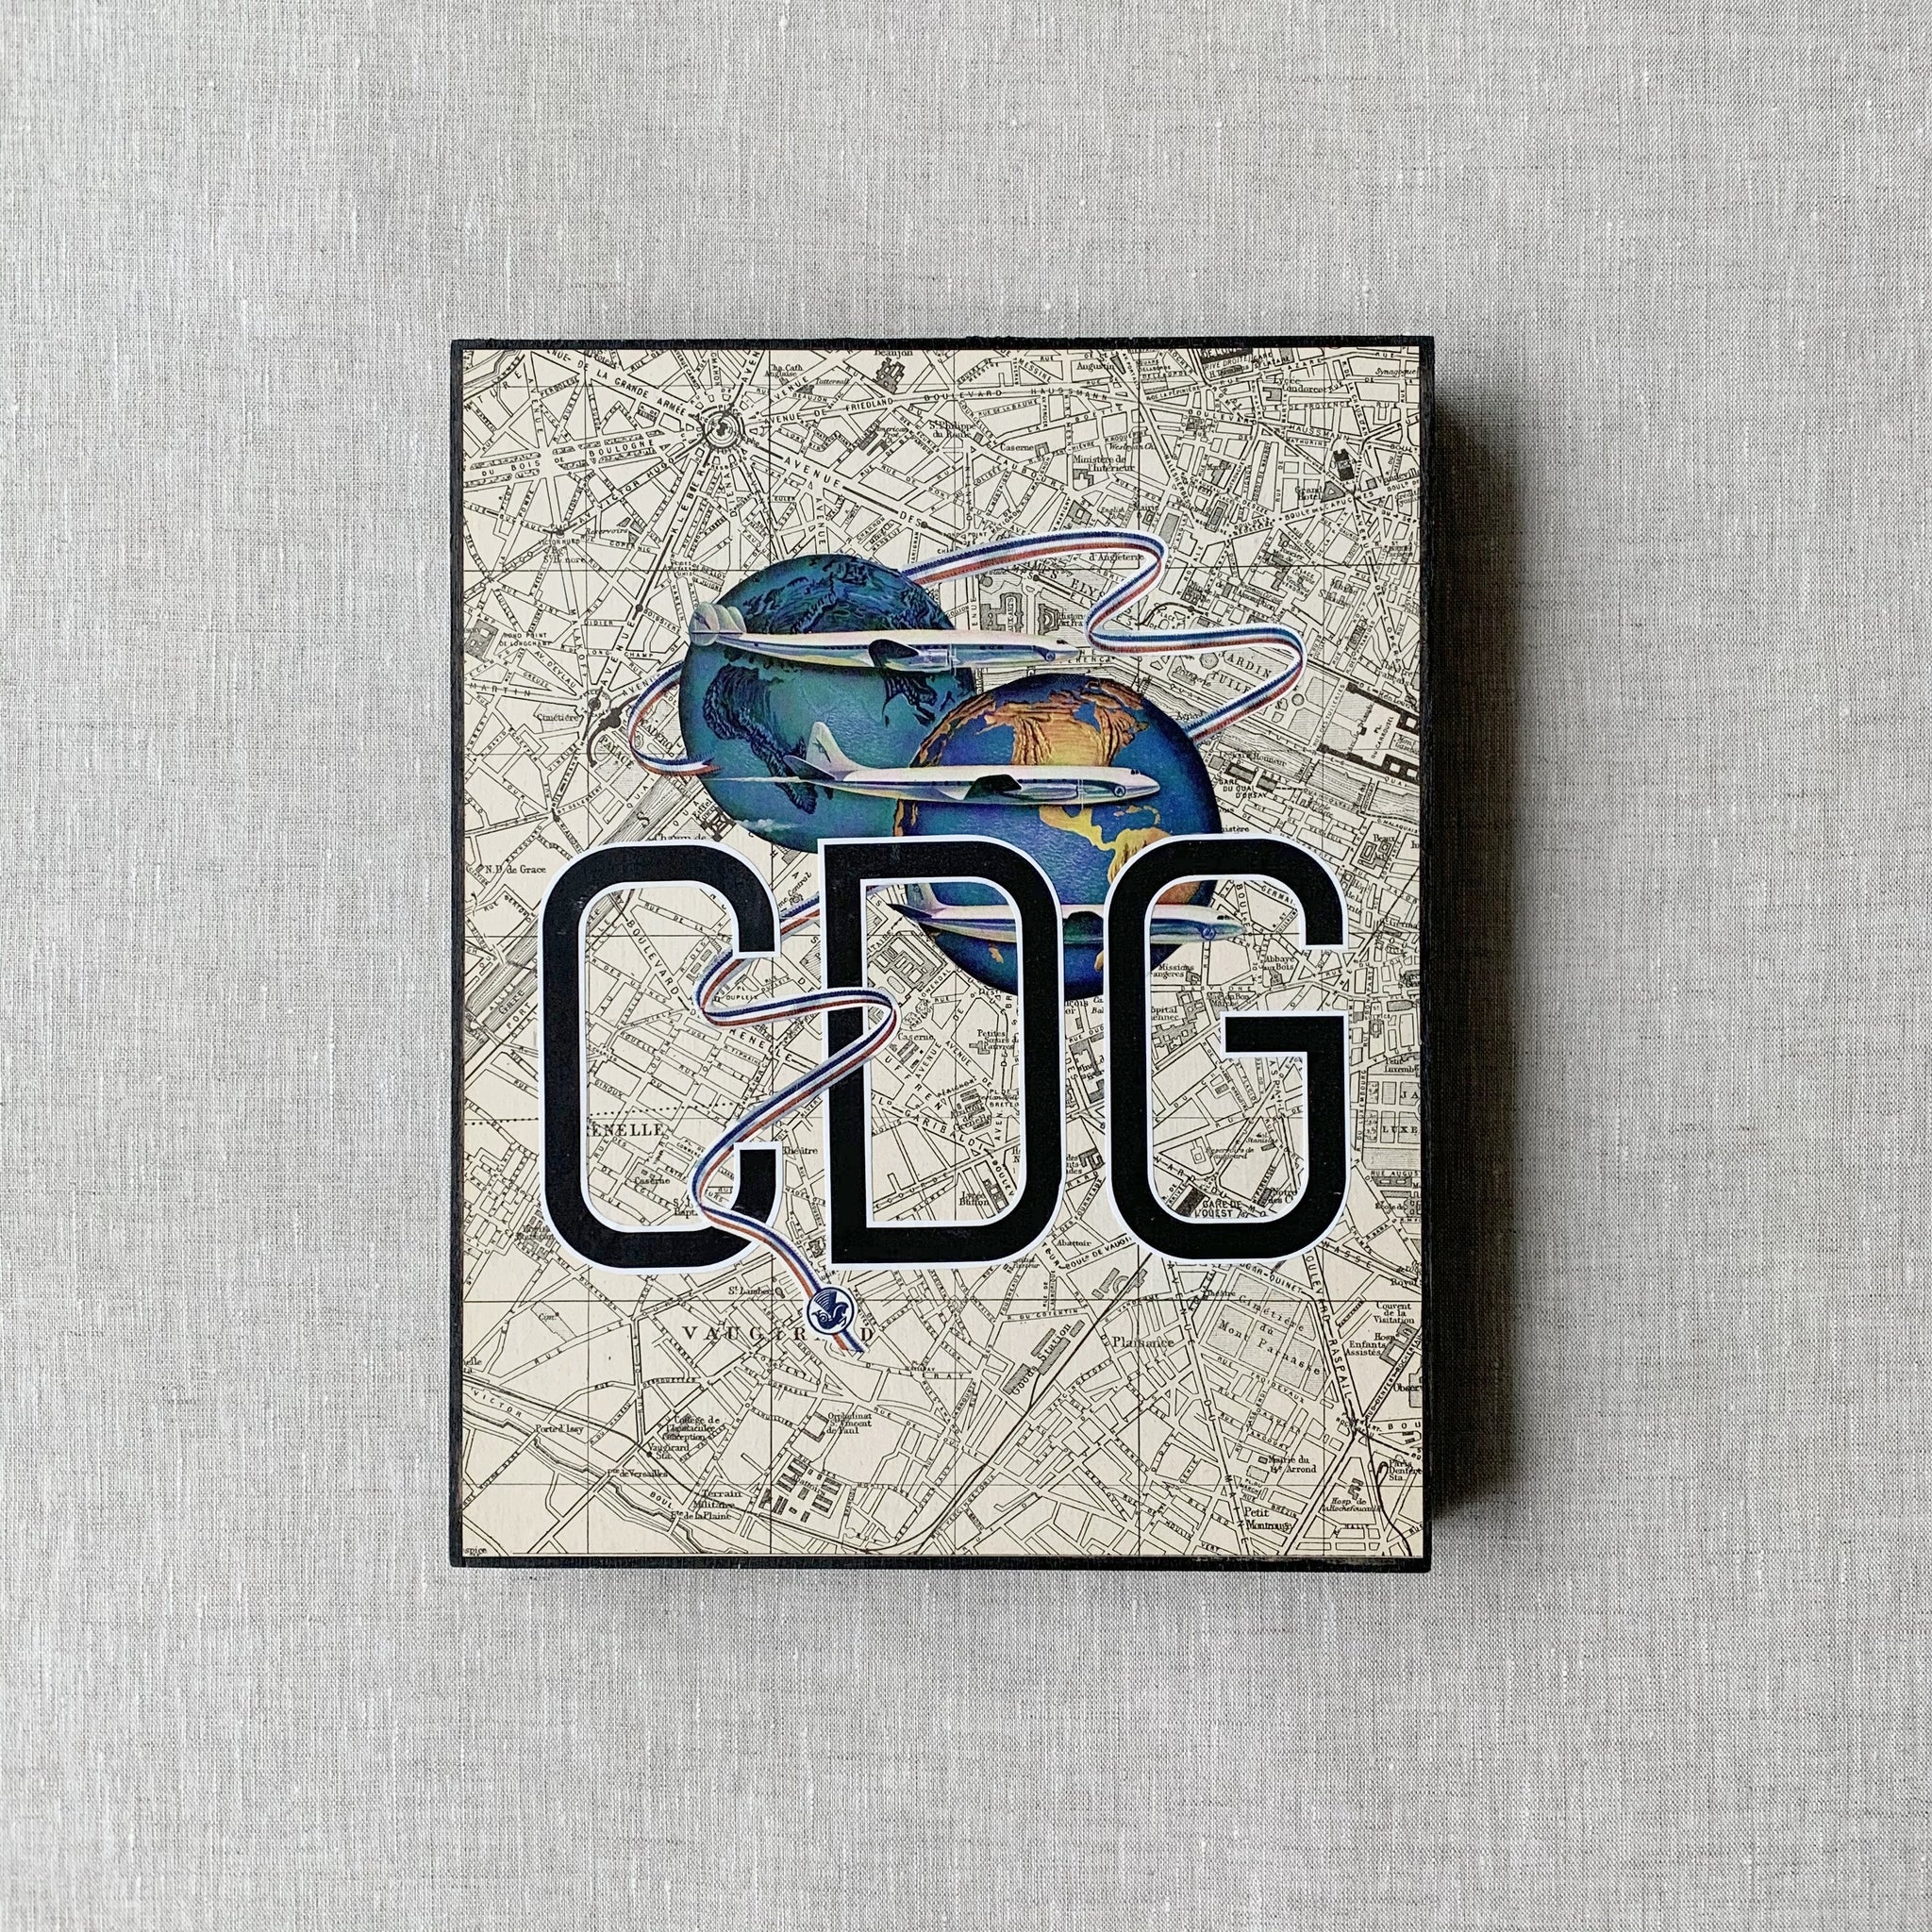 CDG Charles de Gaulle Airport, Paris, France. Original Map Art Collage on Wood Panel